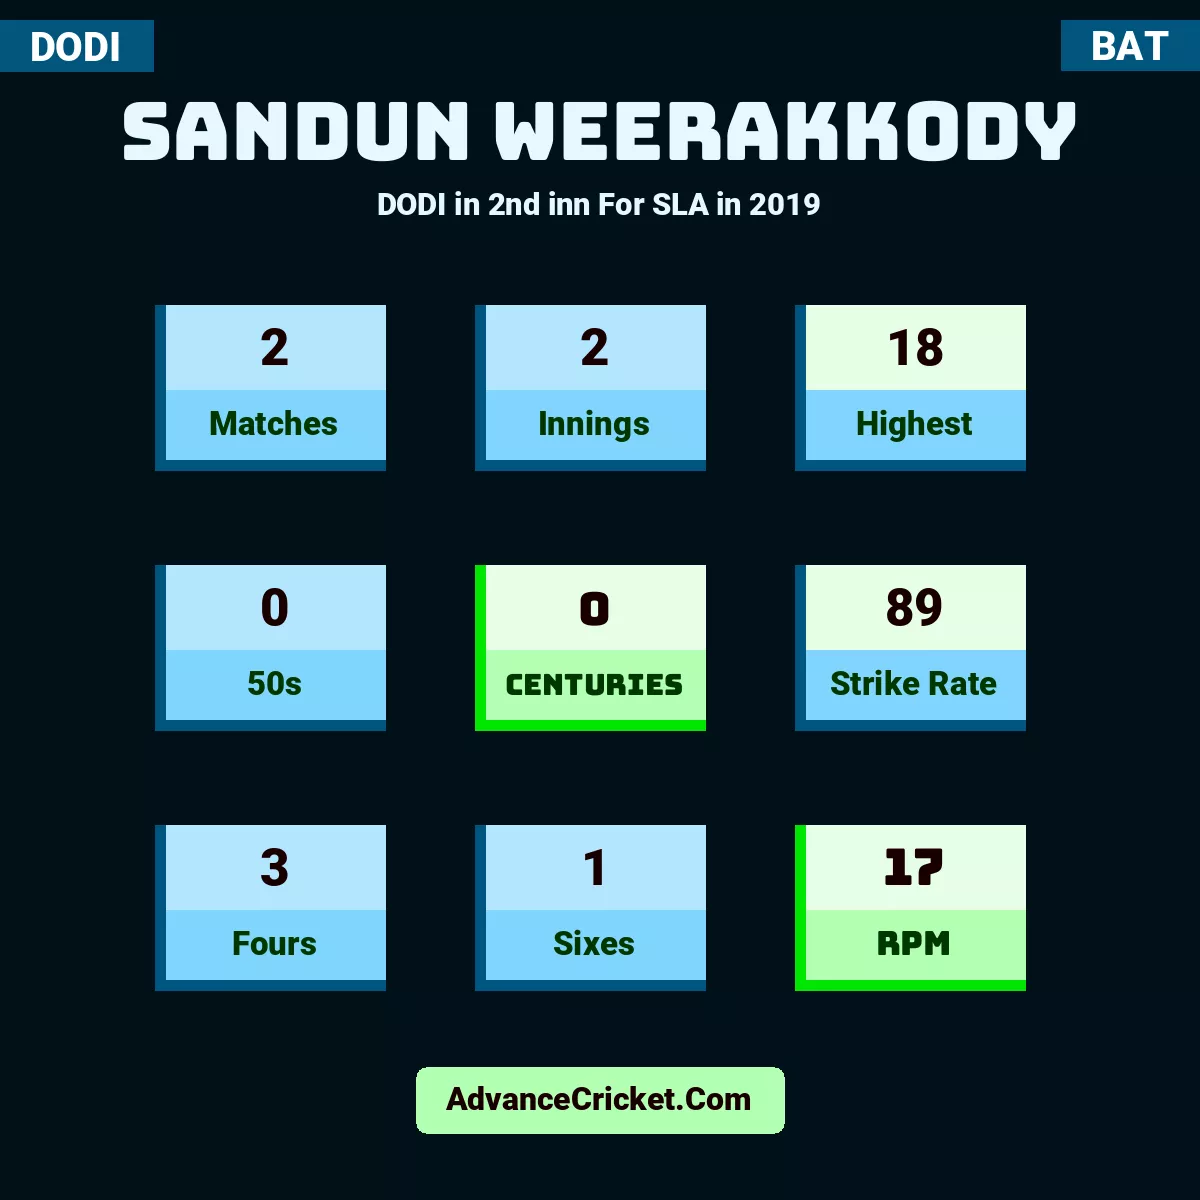 Sandun Weerakkody DODI  in 2nd inn For SLA in 2019, Sandun Weerakkody played 2 matches, scored 18 runs as highest, 0 half-centuries, and 0 centuries, with a strike rate of 89. S.Weerakkody hit 3 fours and 1 sixes, with an RPM of 17.